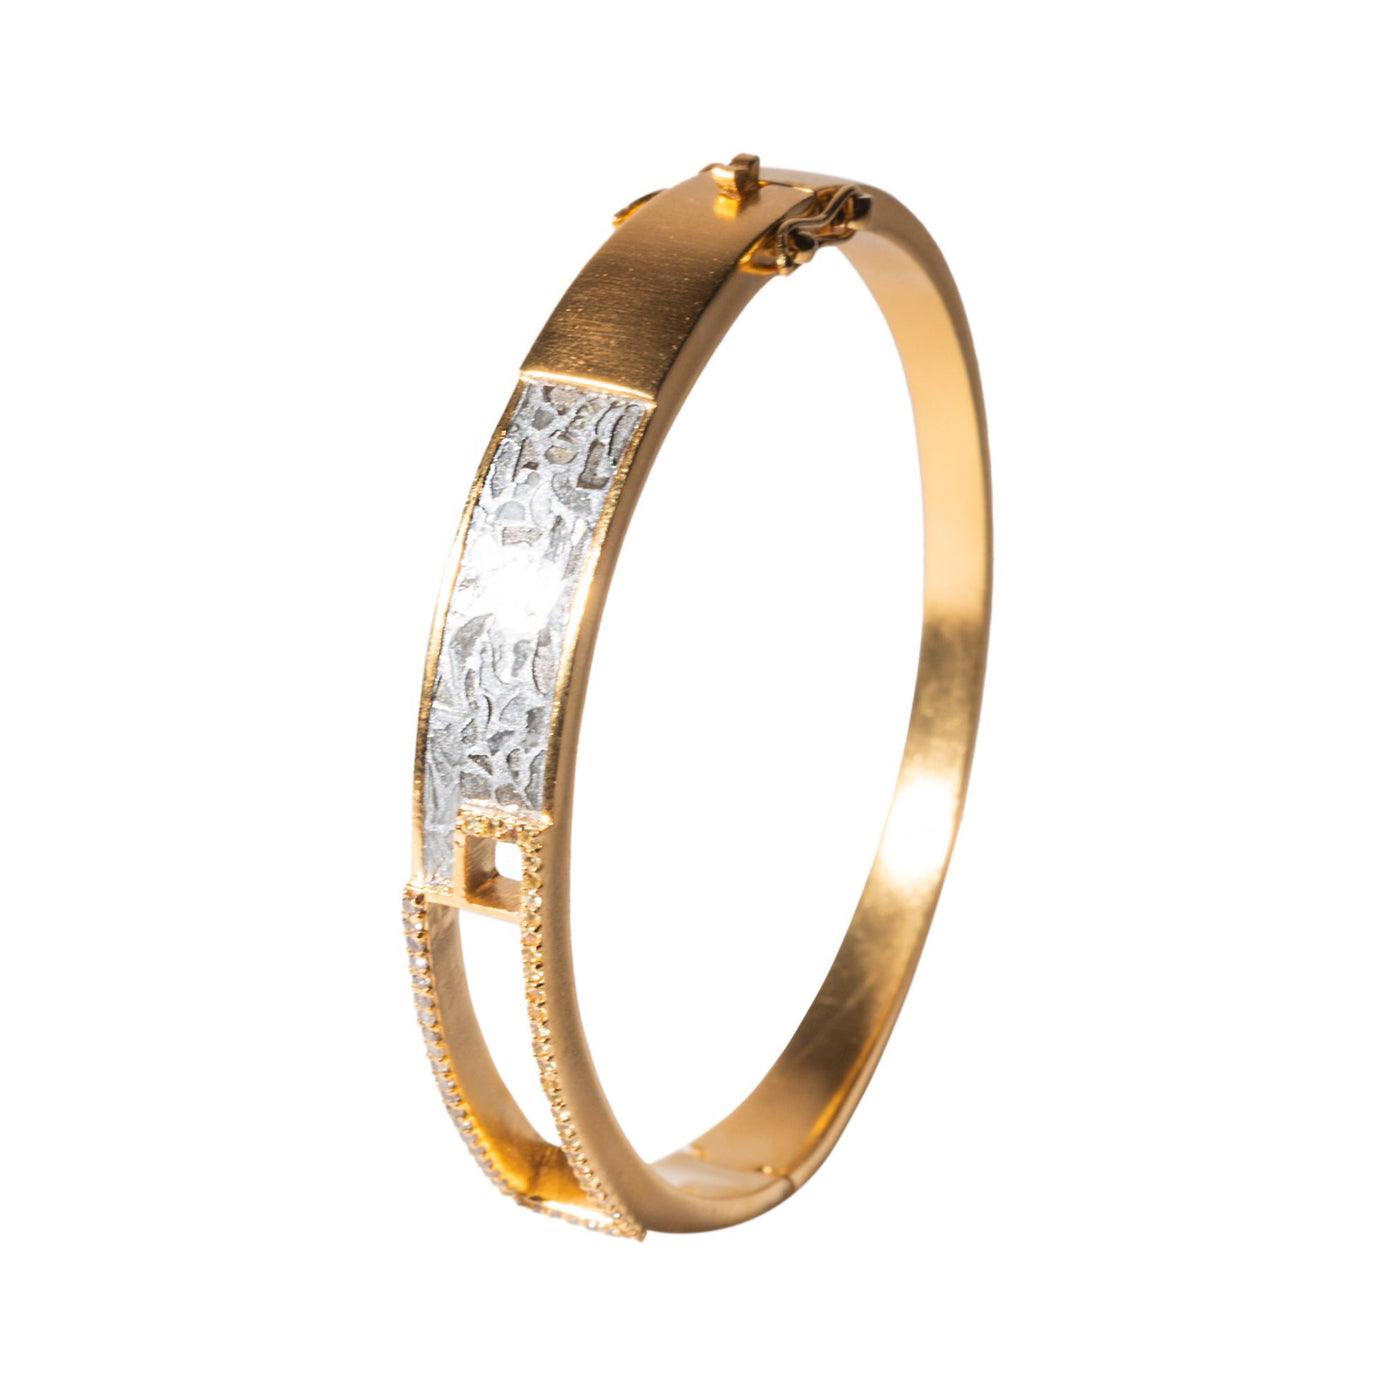 Basit Gold Vermeil Bangle Bracelet